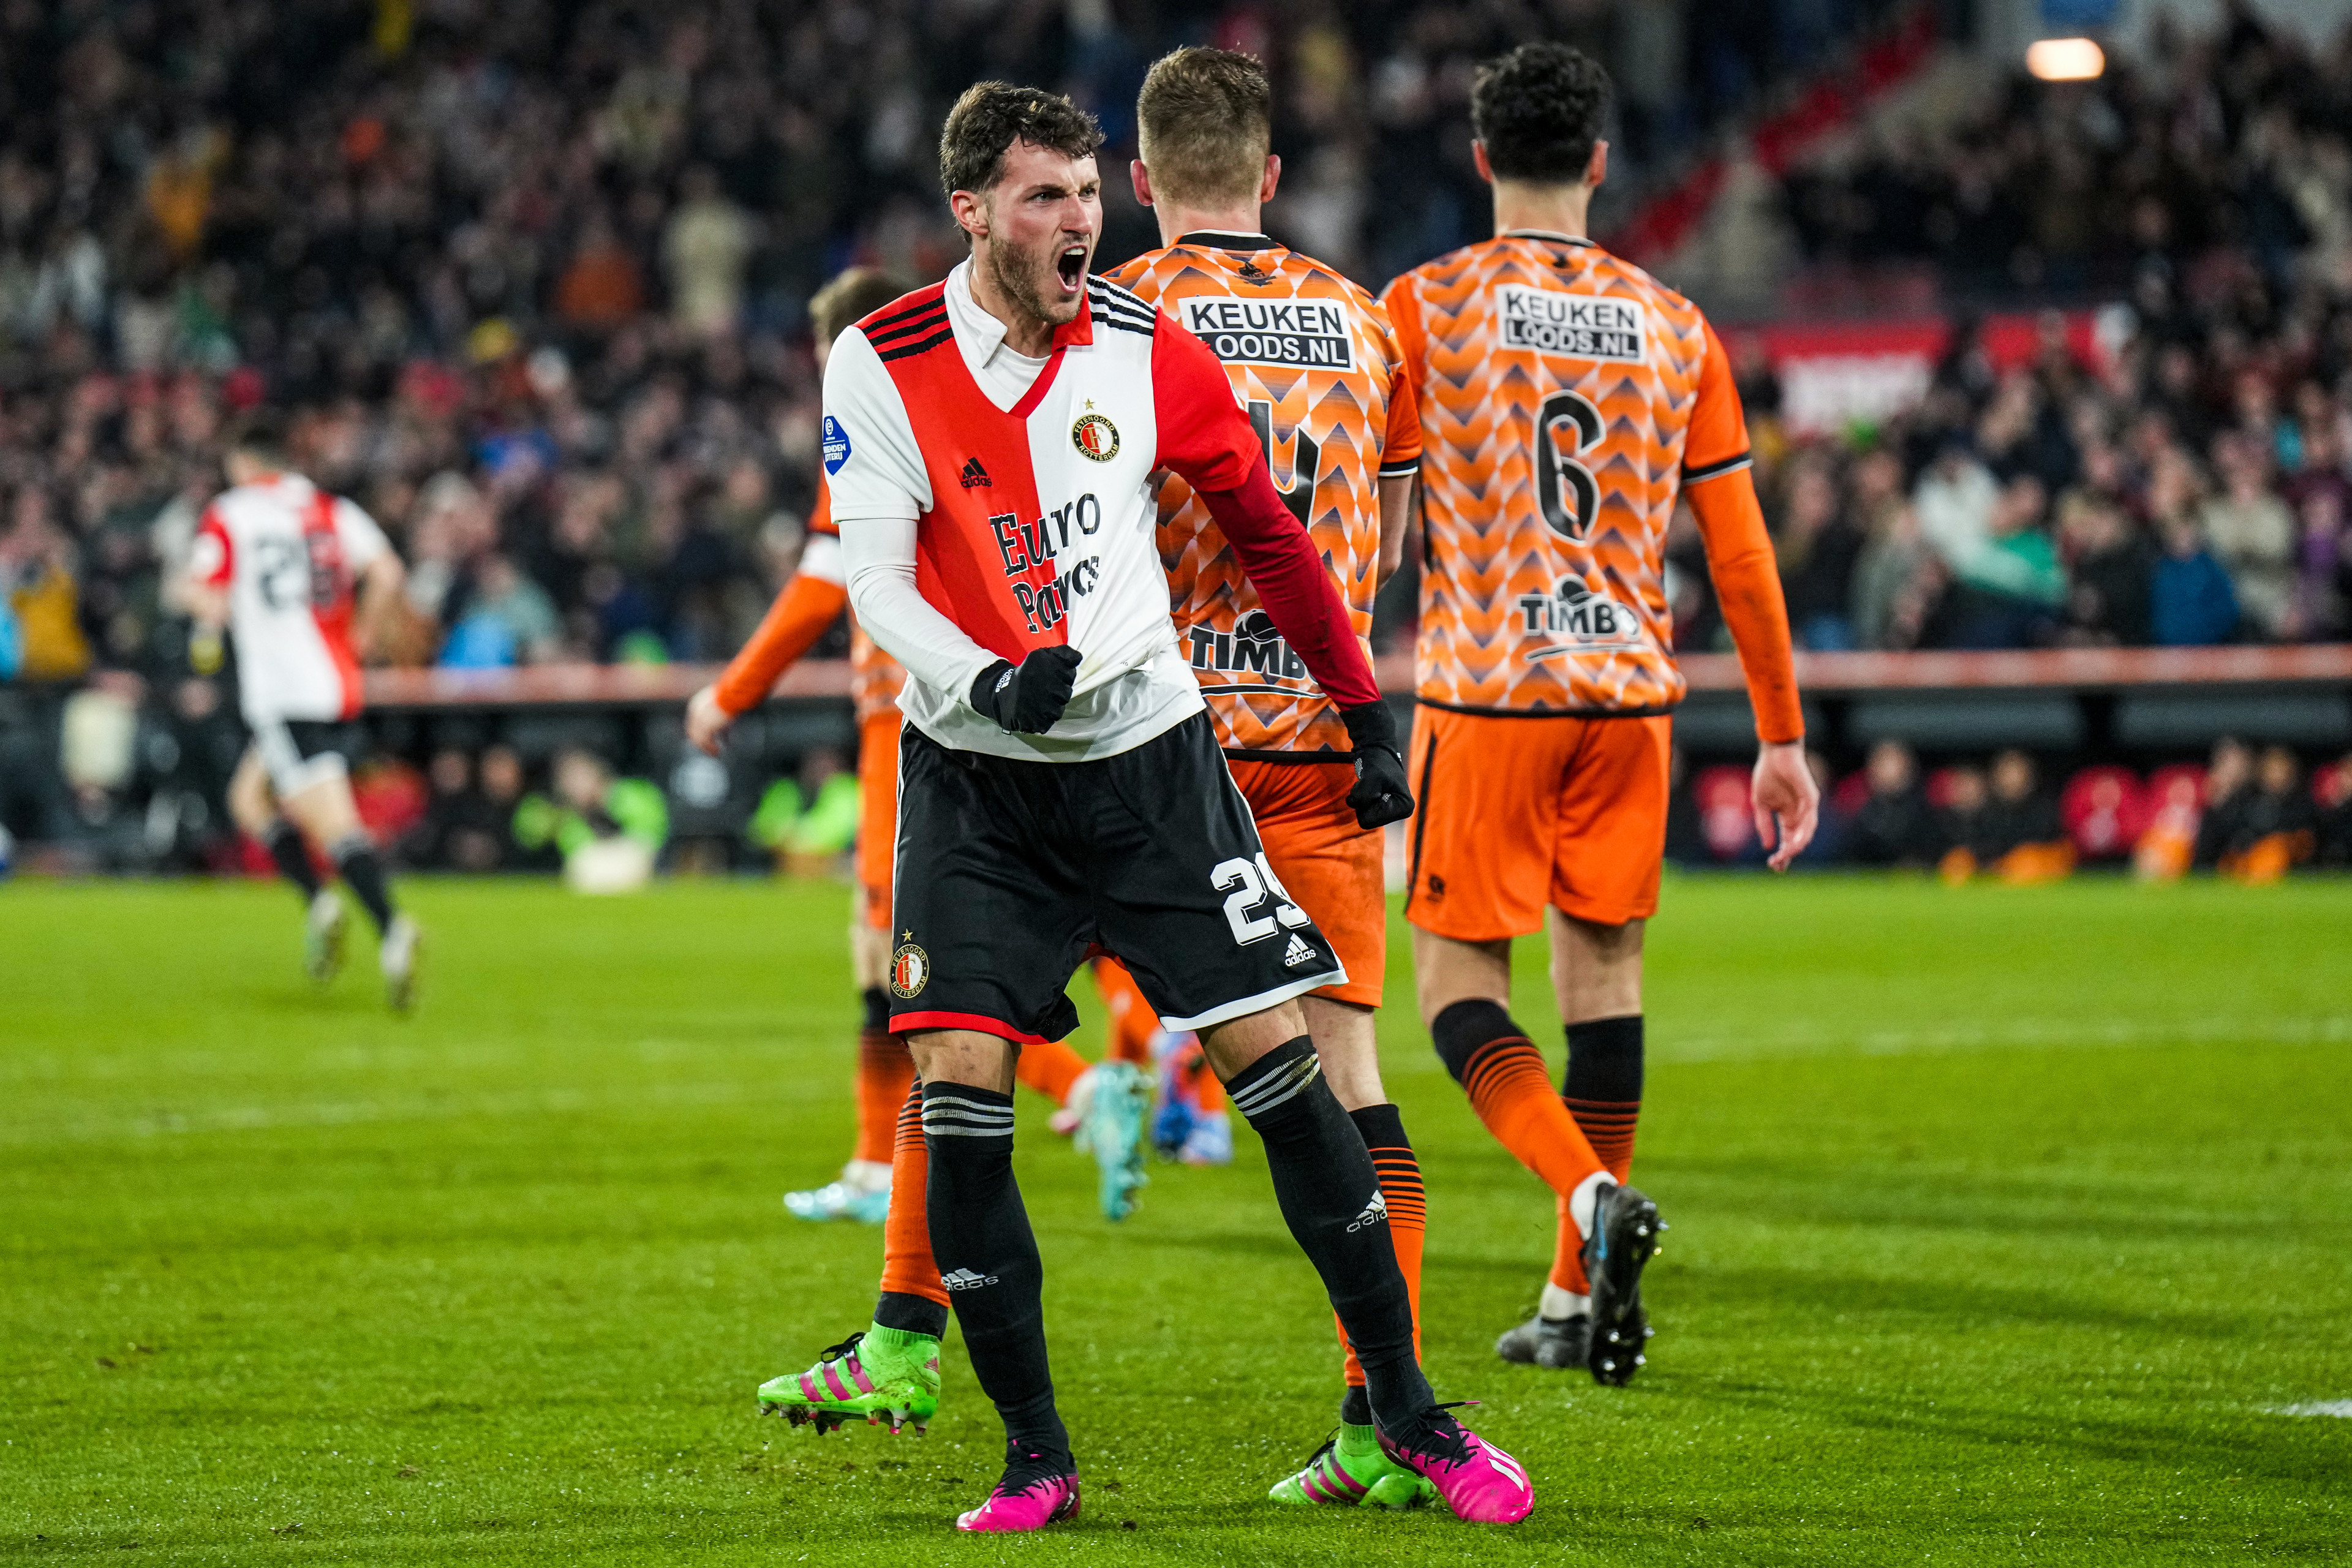 Feyenoord - FC Volendam • 2-1 [FT]